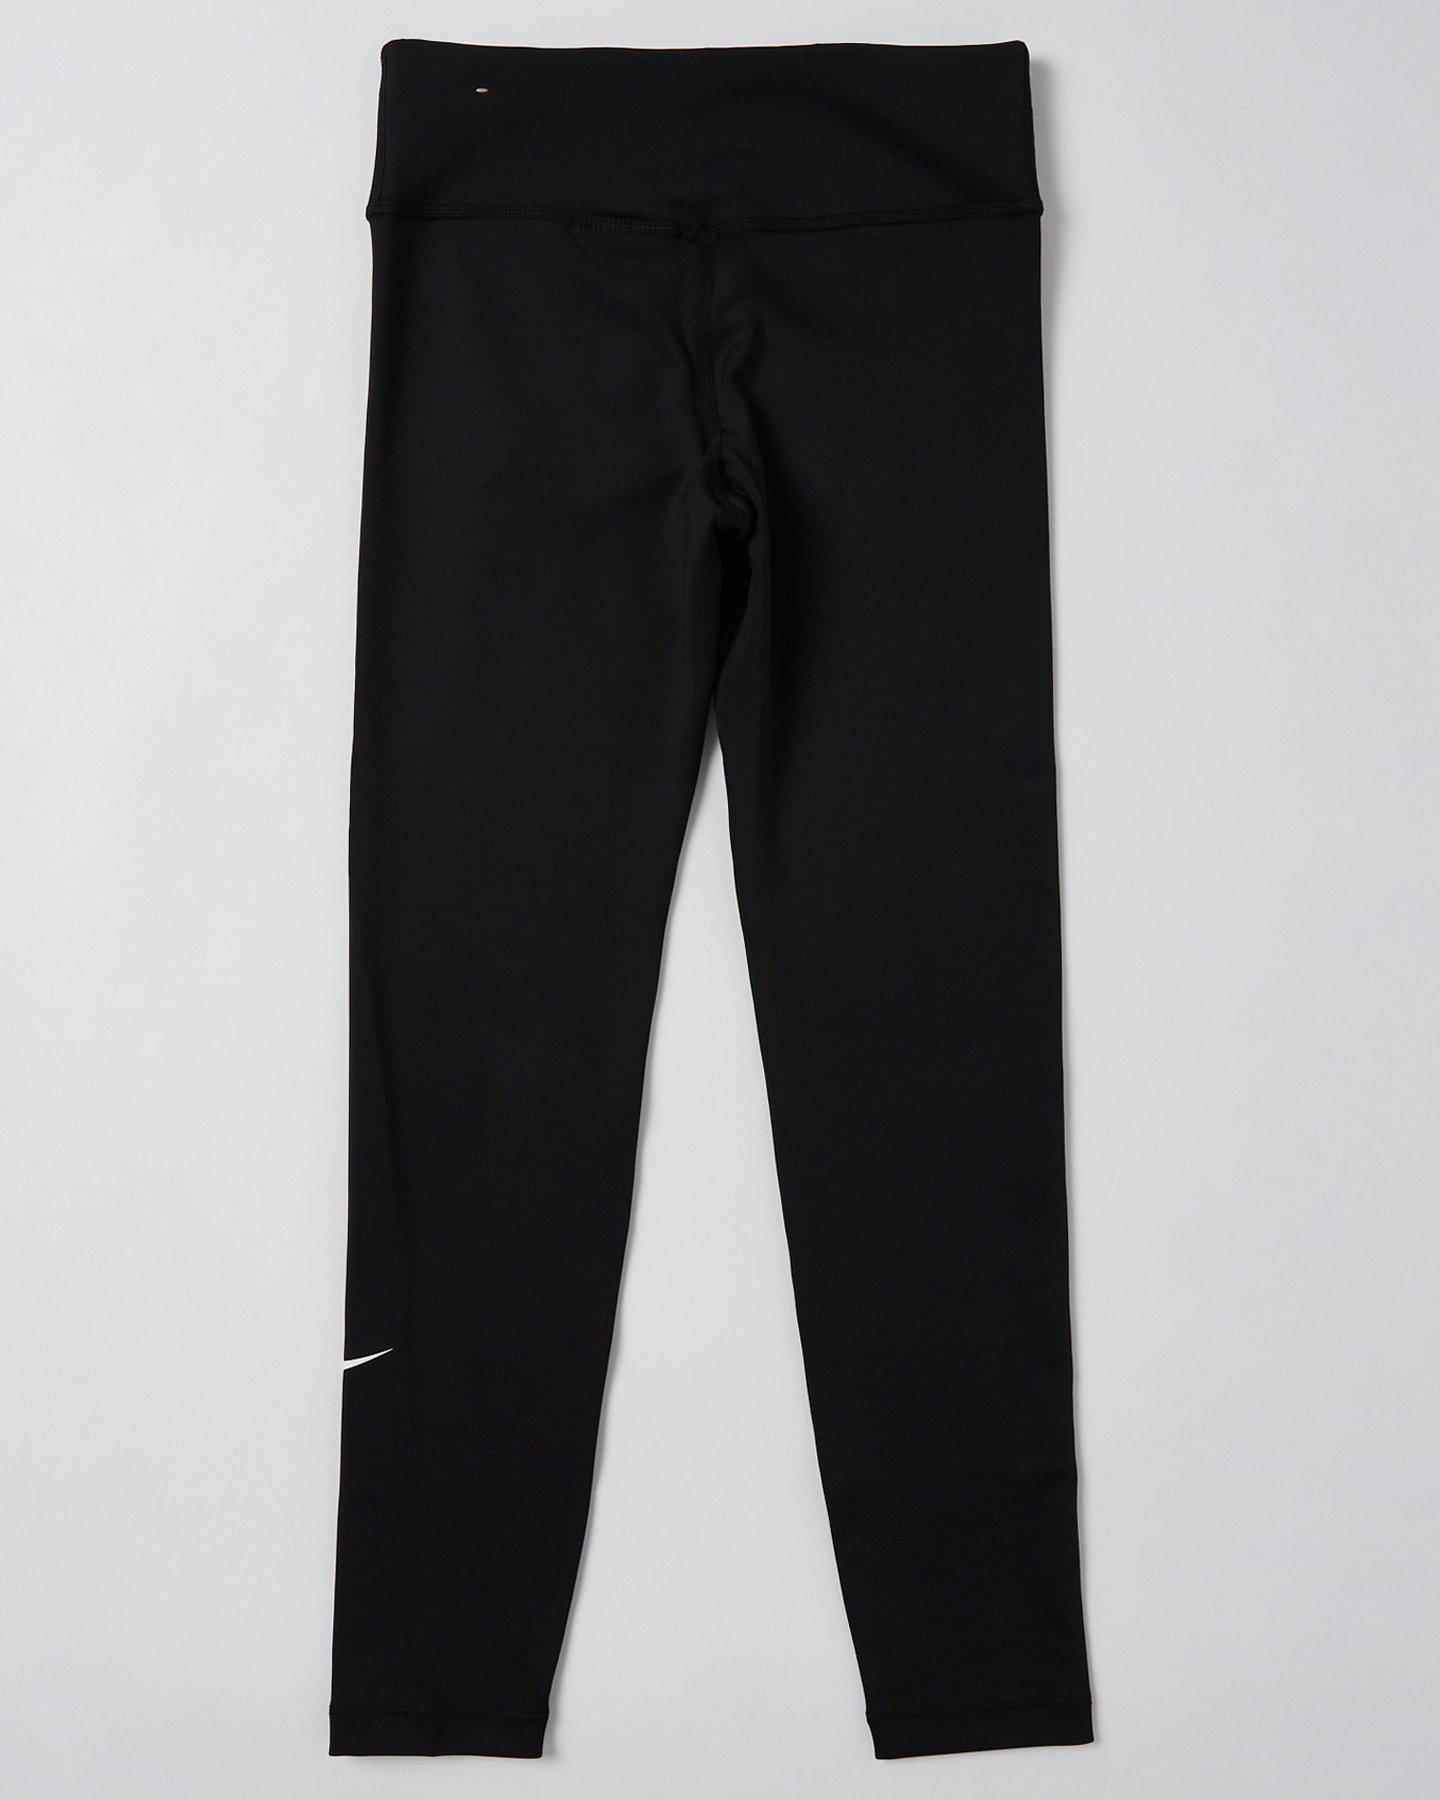 Nike Nike Dri Fit One Leggings - Black White | SurfStitch